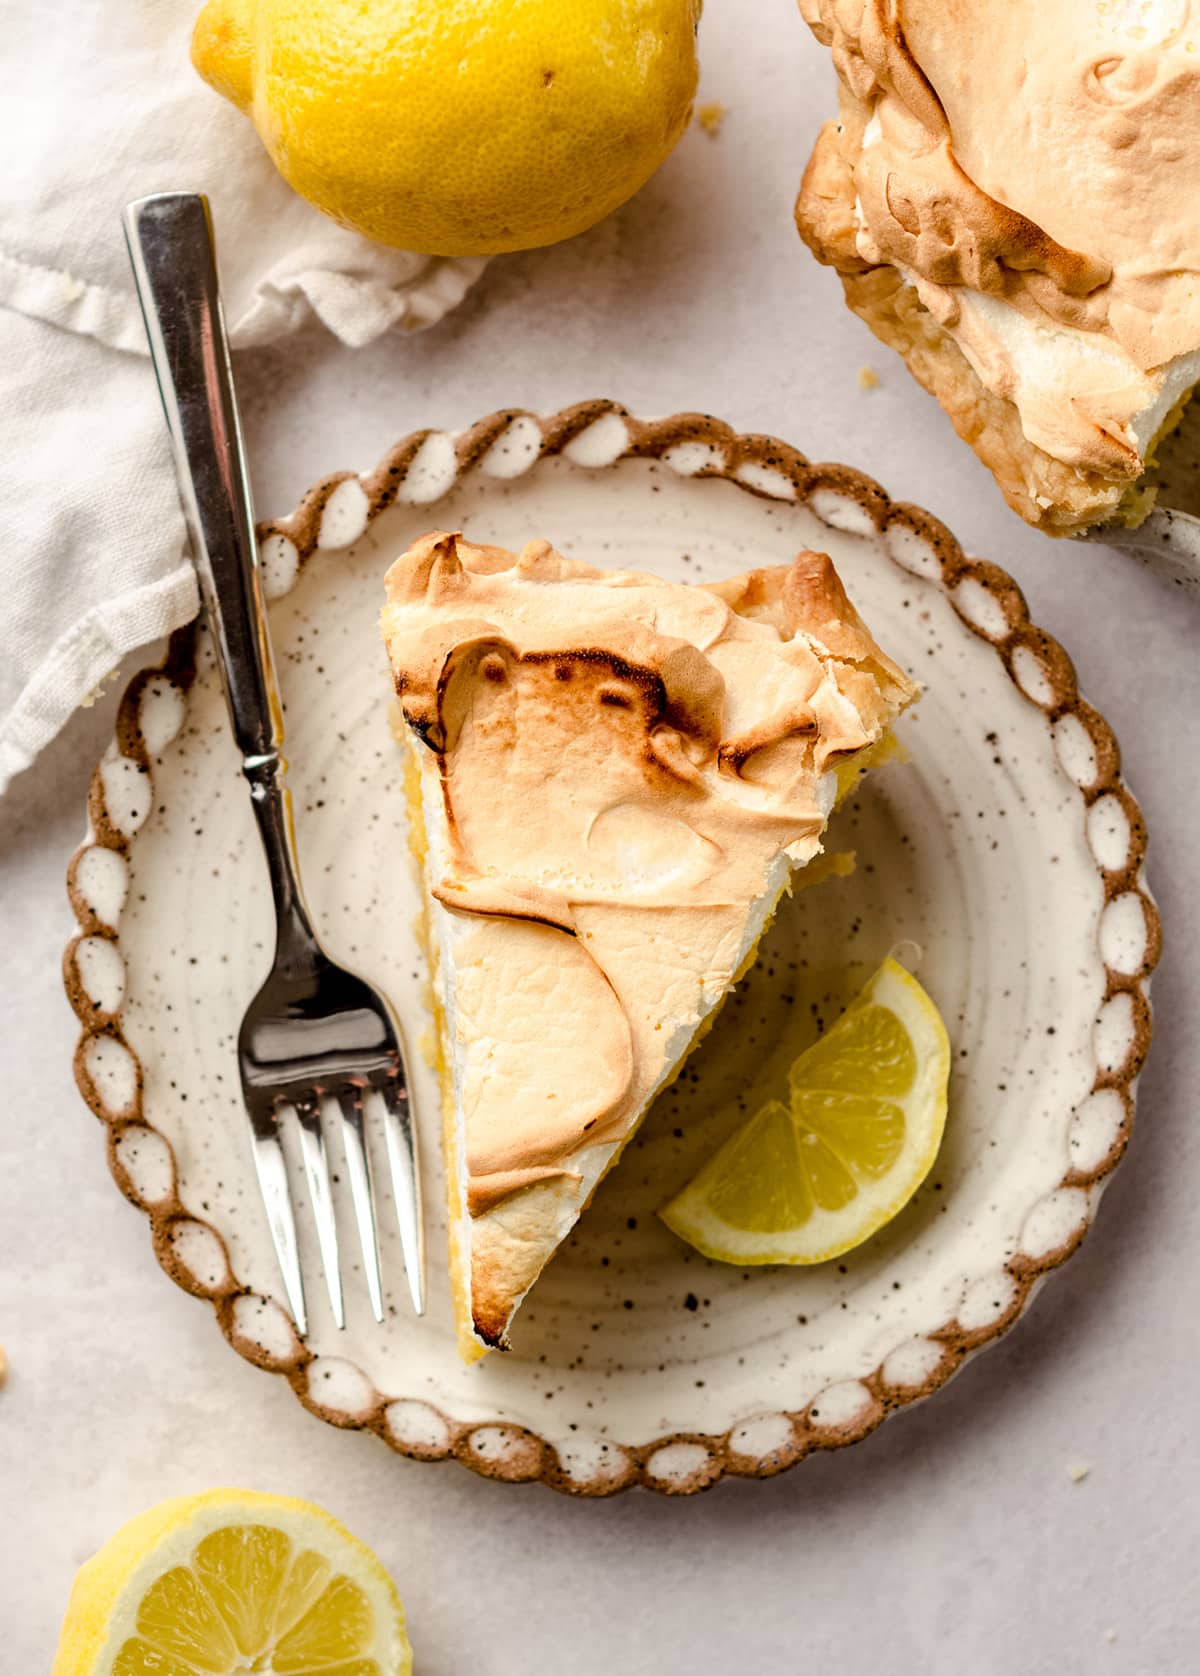 An overhead shot of a slice of lemon meringue pie with lemons on the side as garnish.